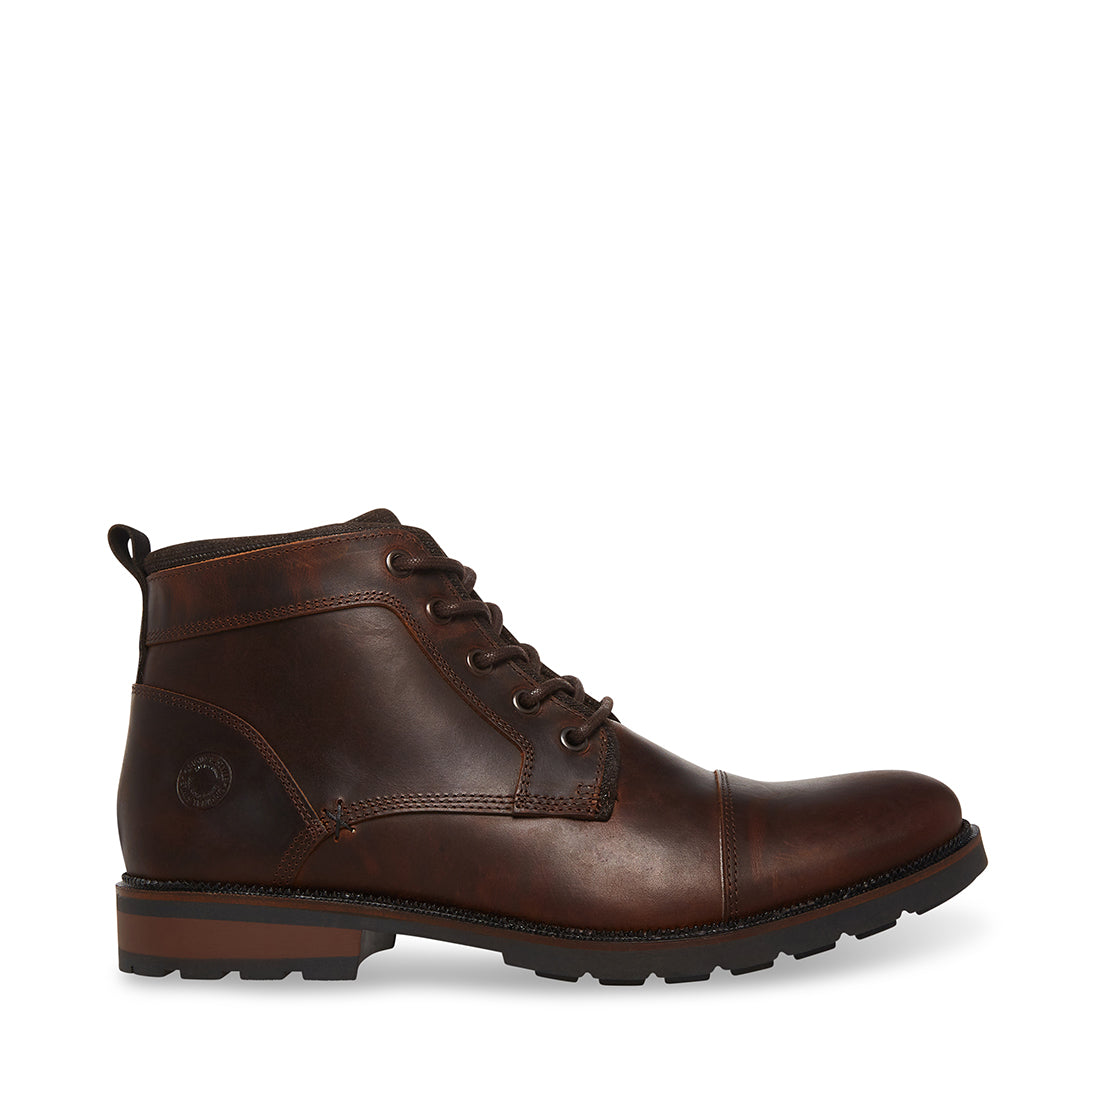 LANIER Brown Leather Boot | Men's Boots – Steve Madden